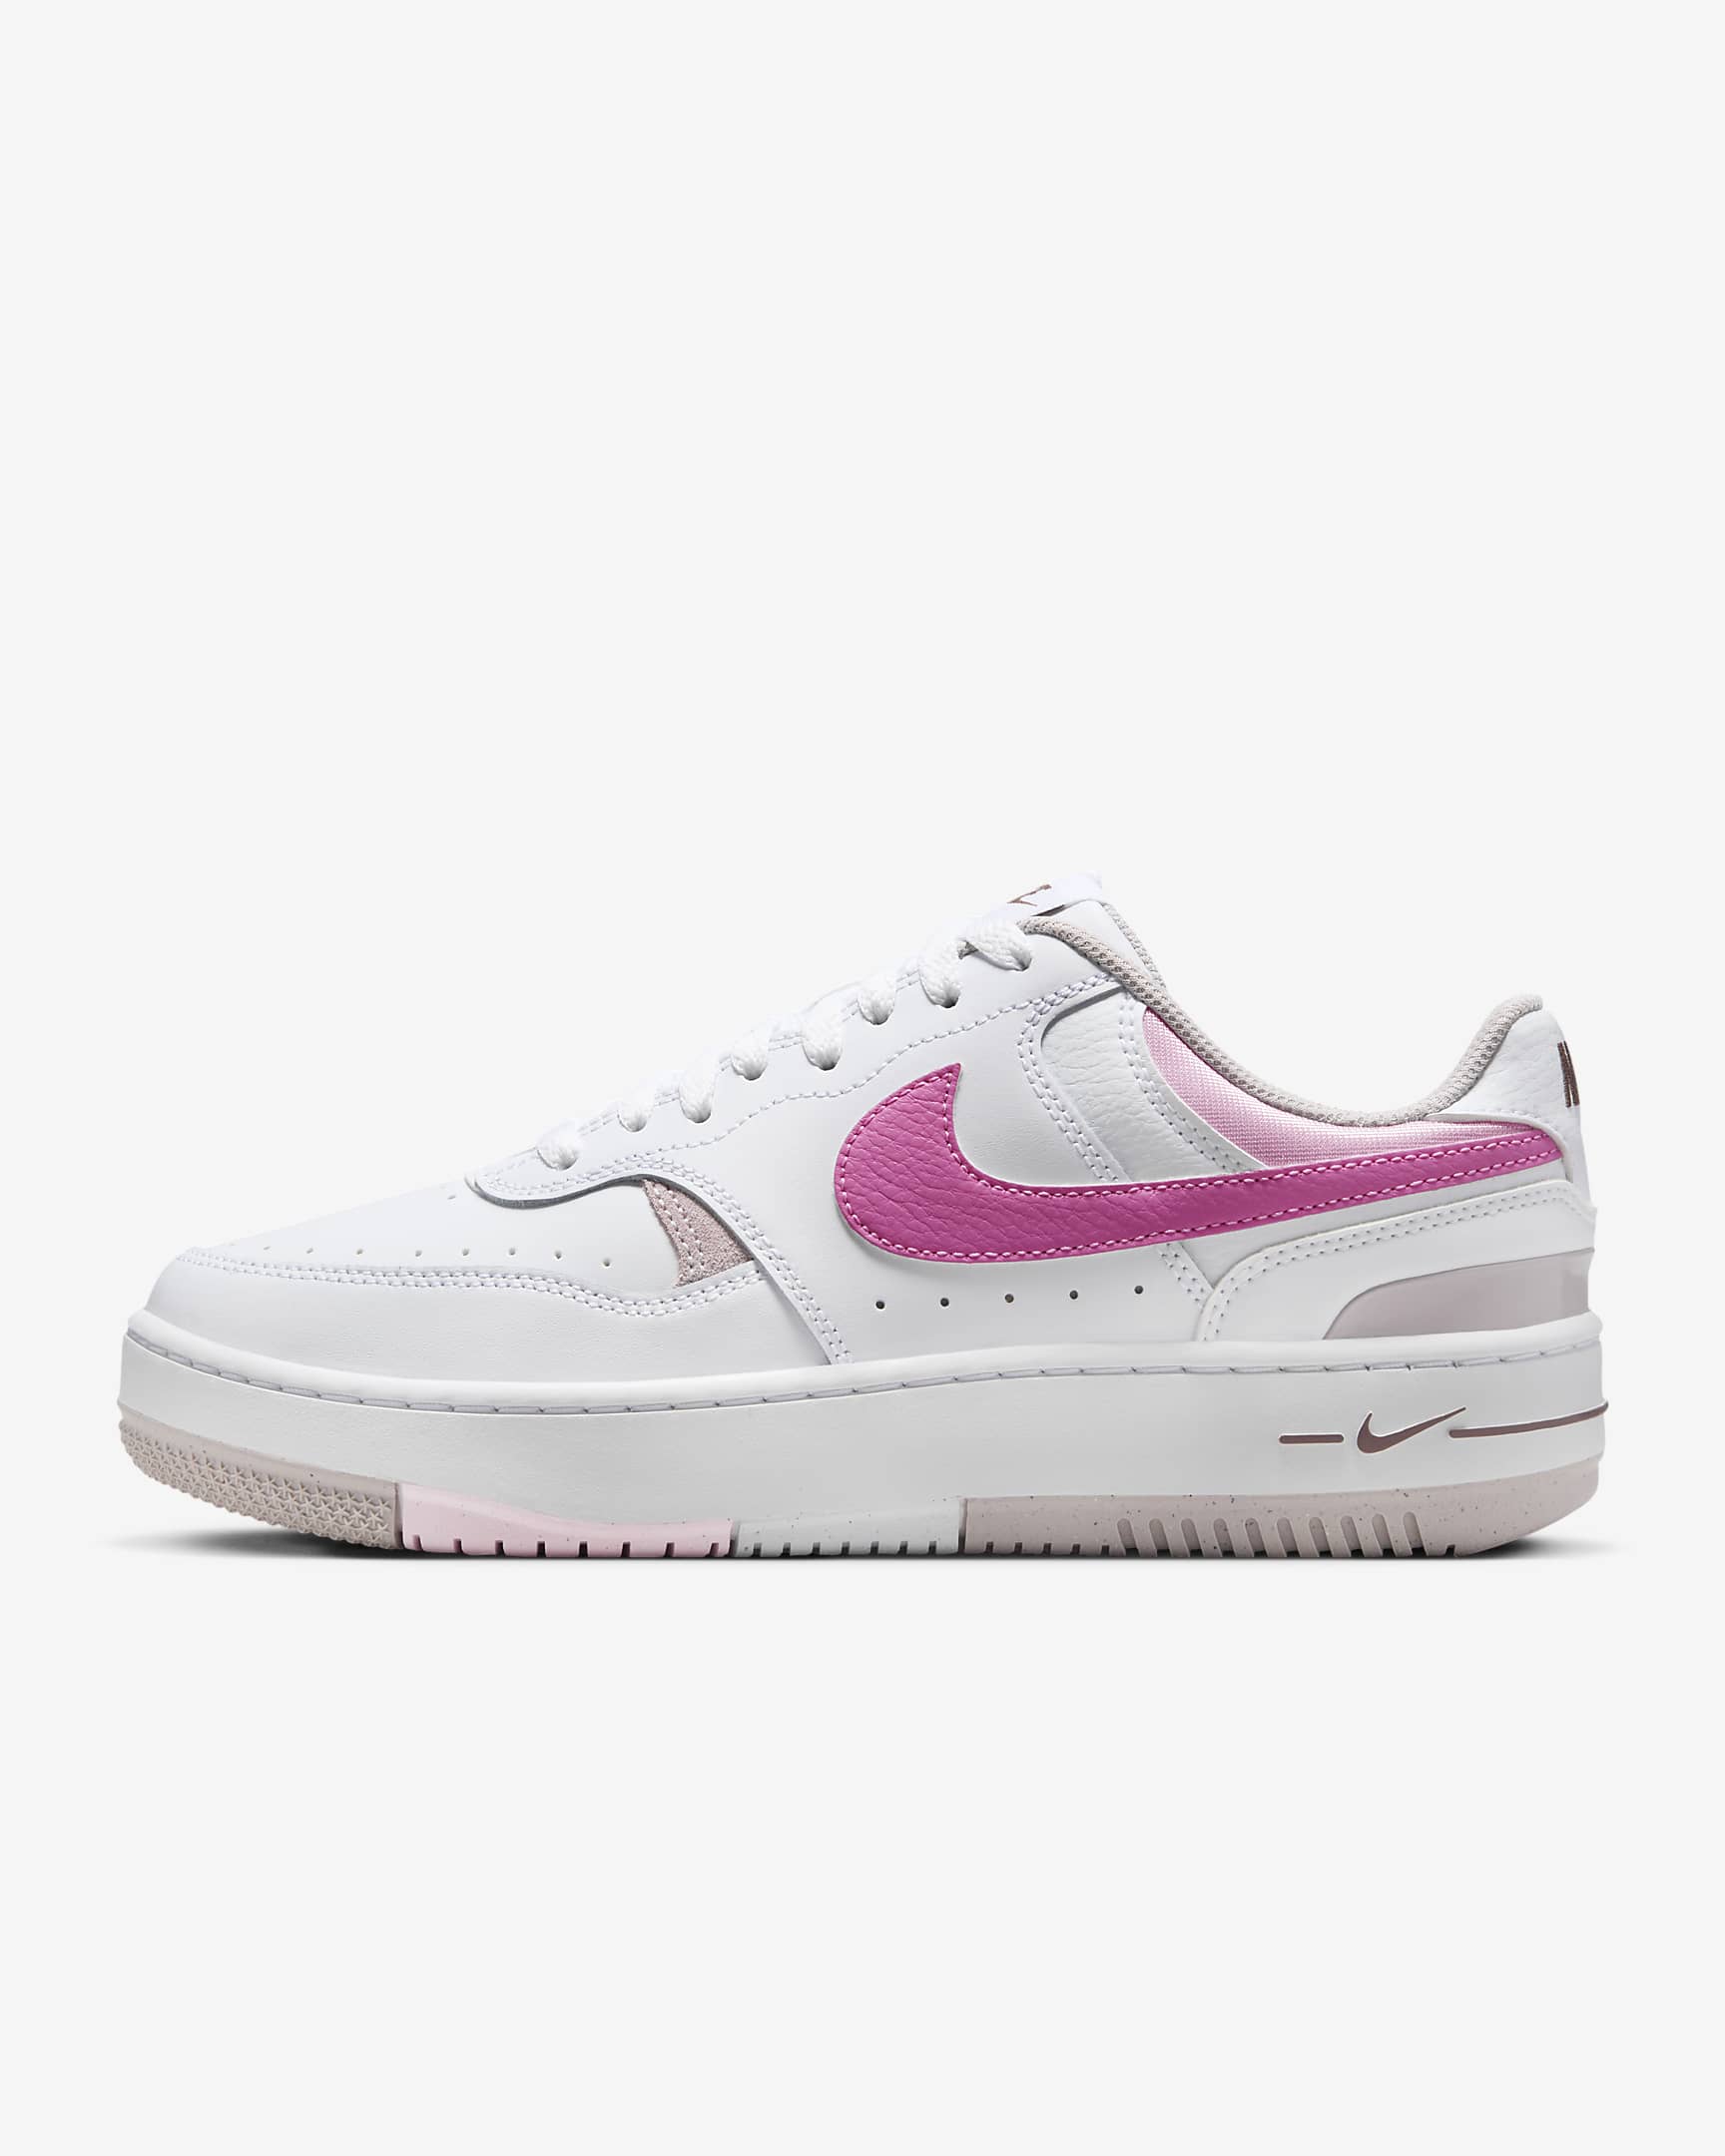 Chaussure Nike Gamma Force pour femme - Blanc/Platinum Violet/Pink Foam/Playful Pink